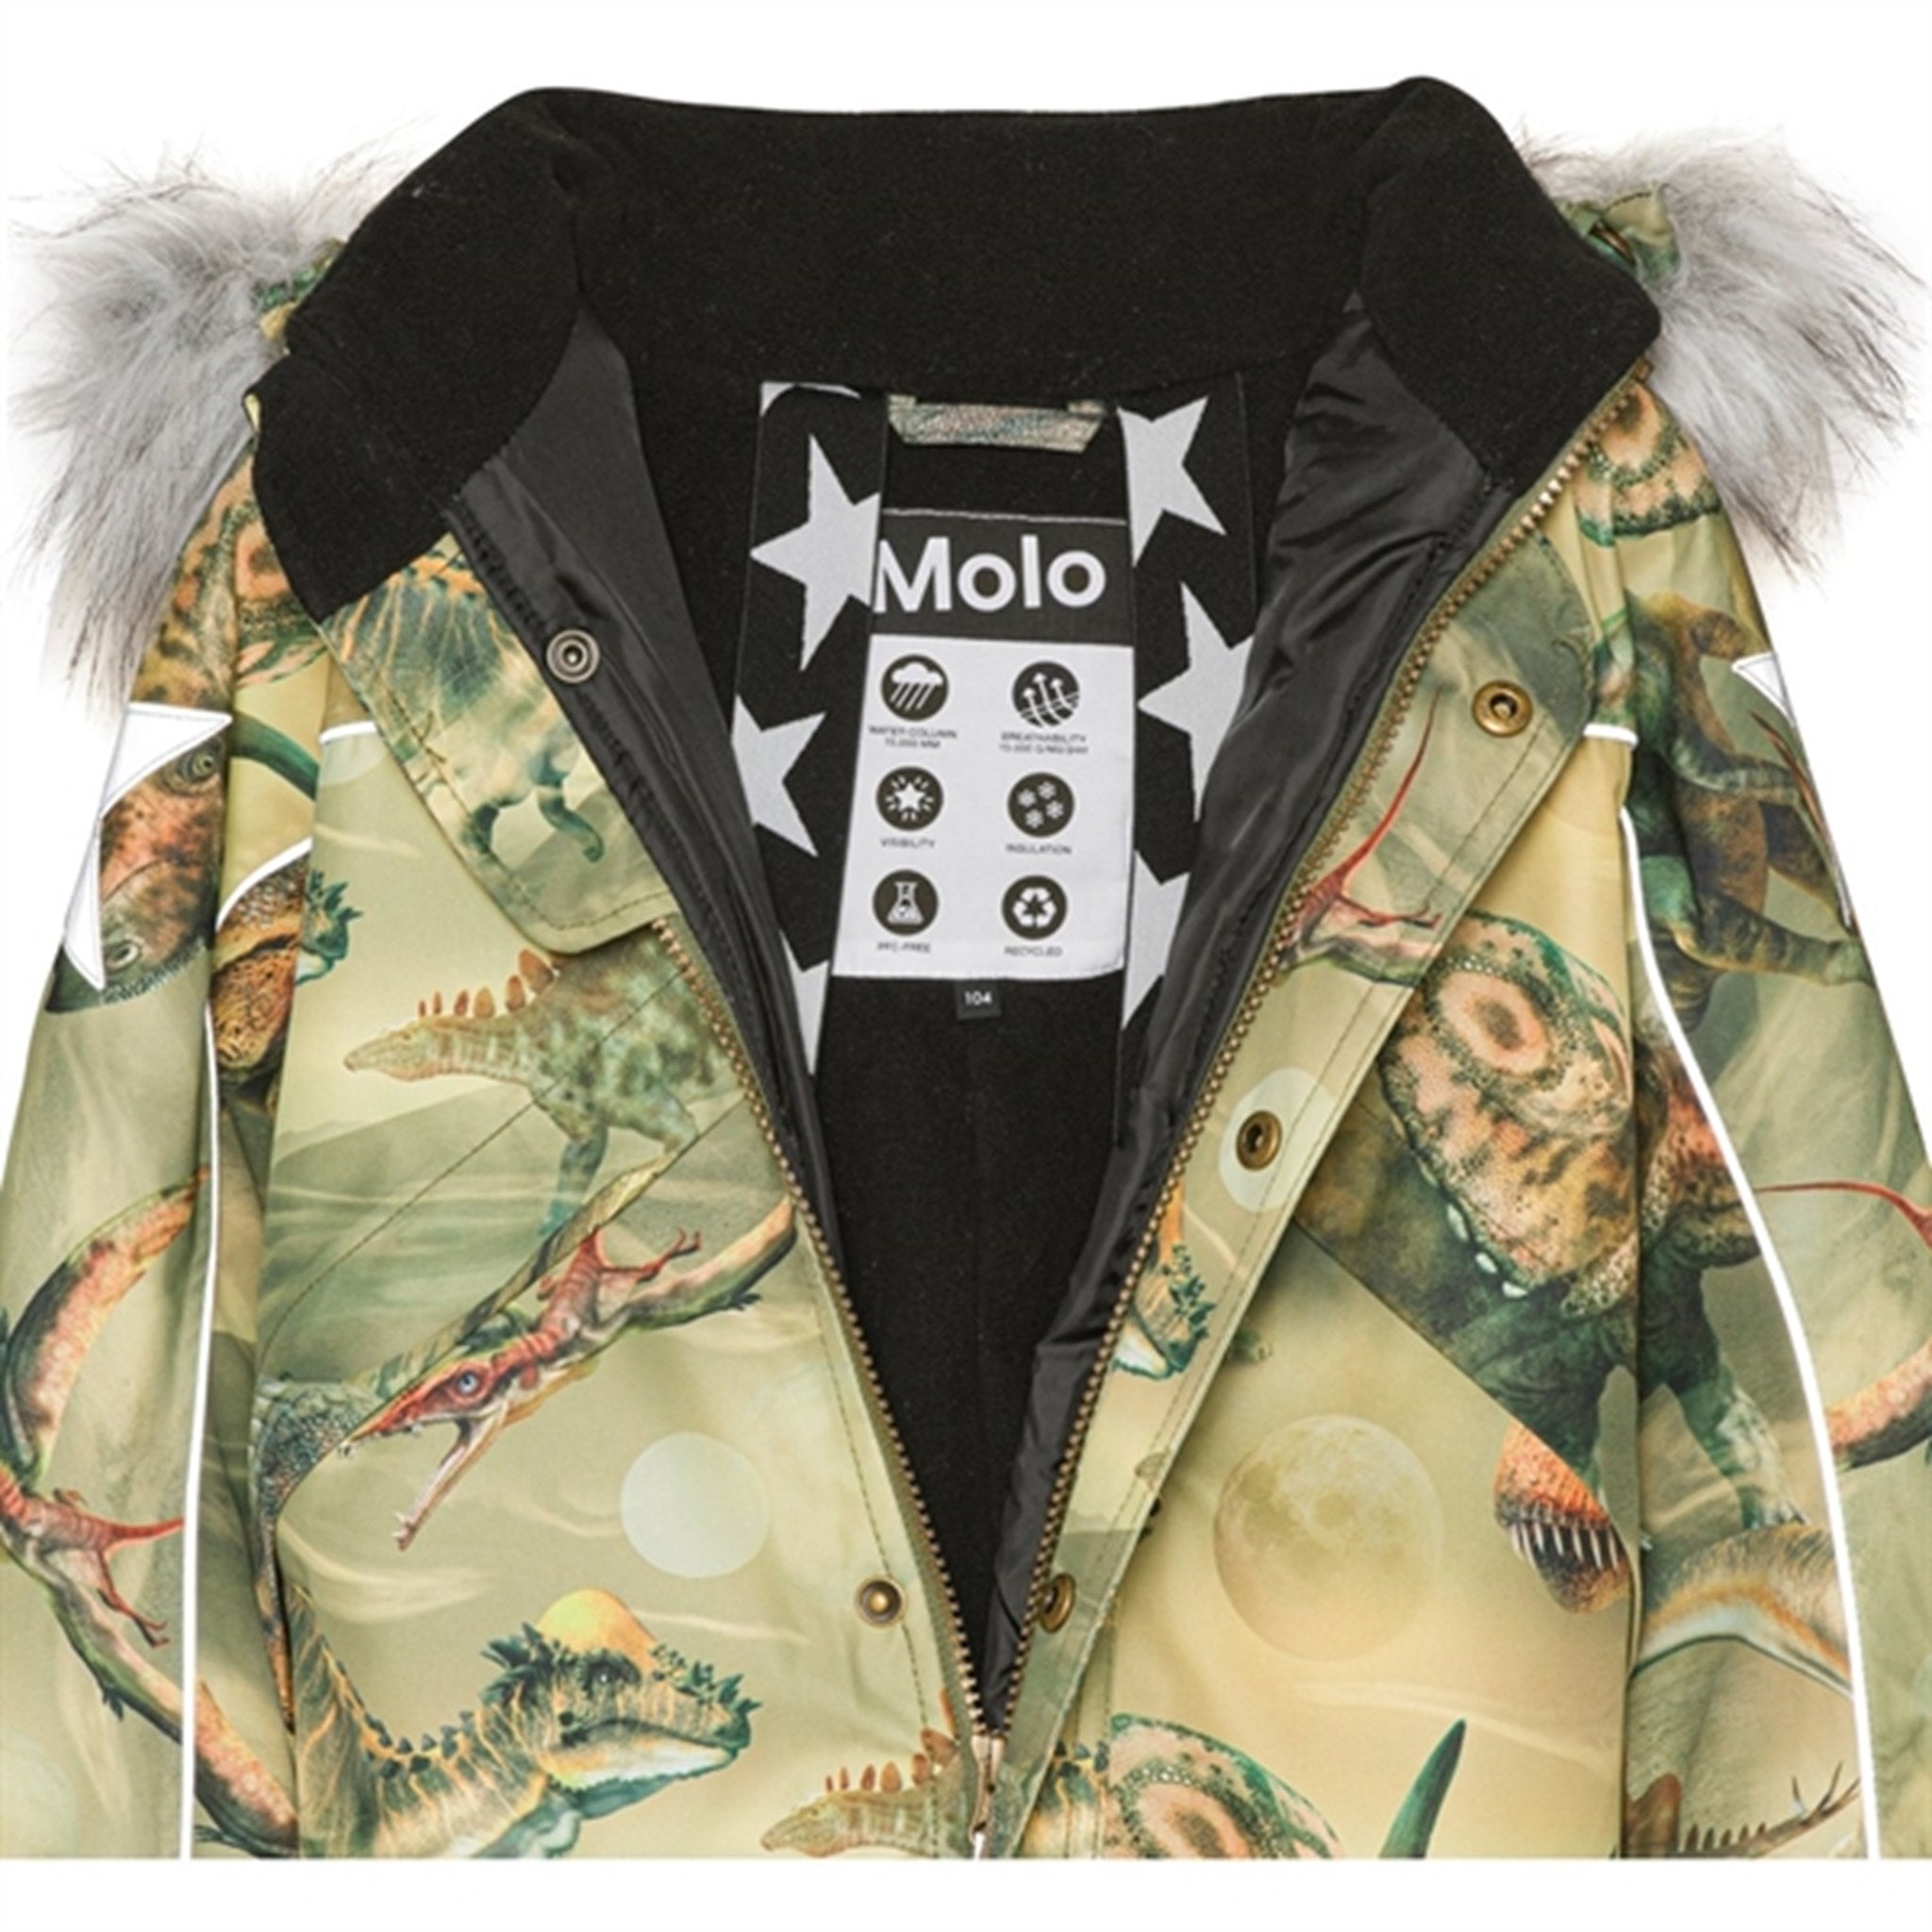 Molo Ancient Time Polaris Fur Junior Snowsuit 3